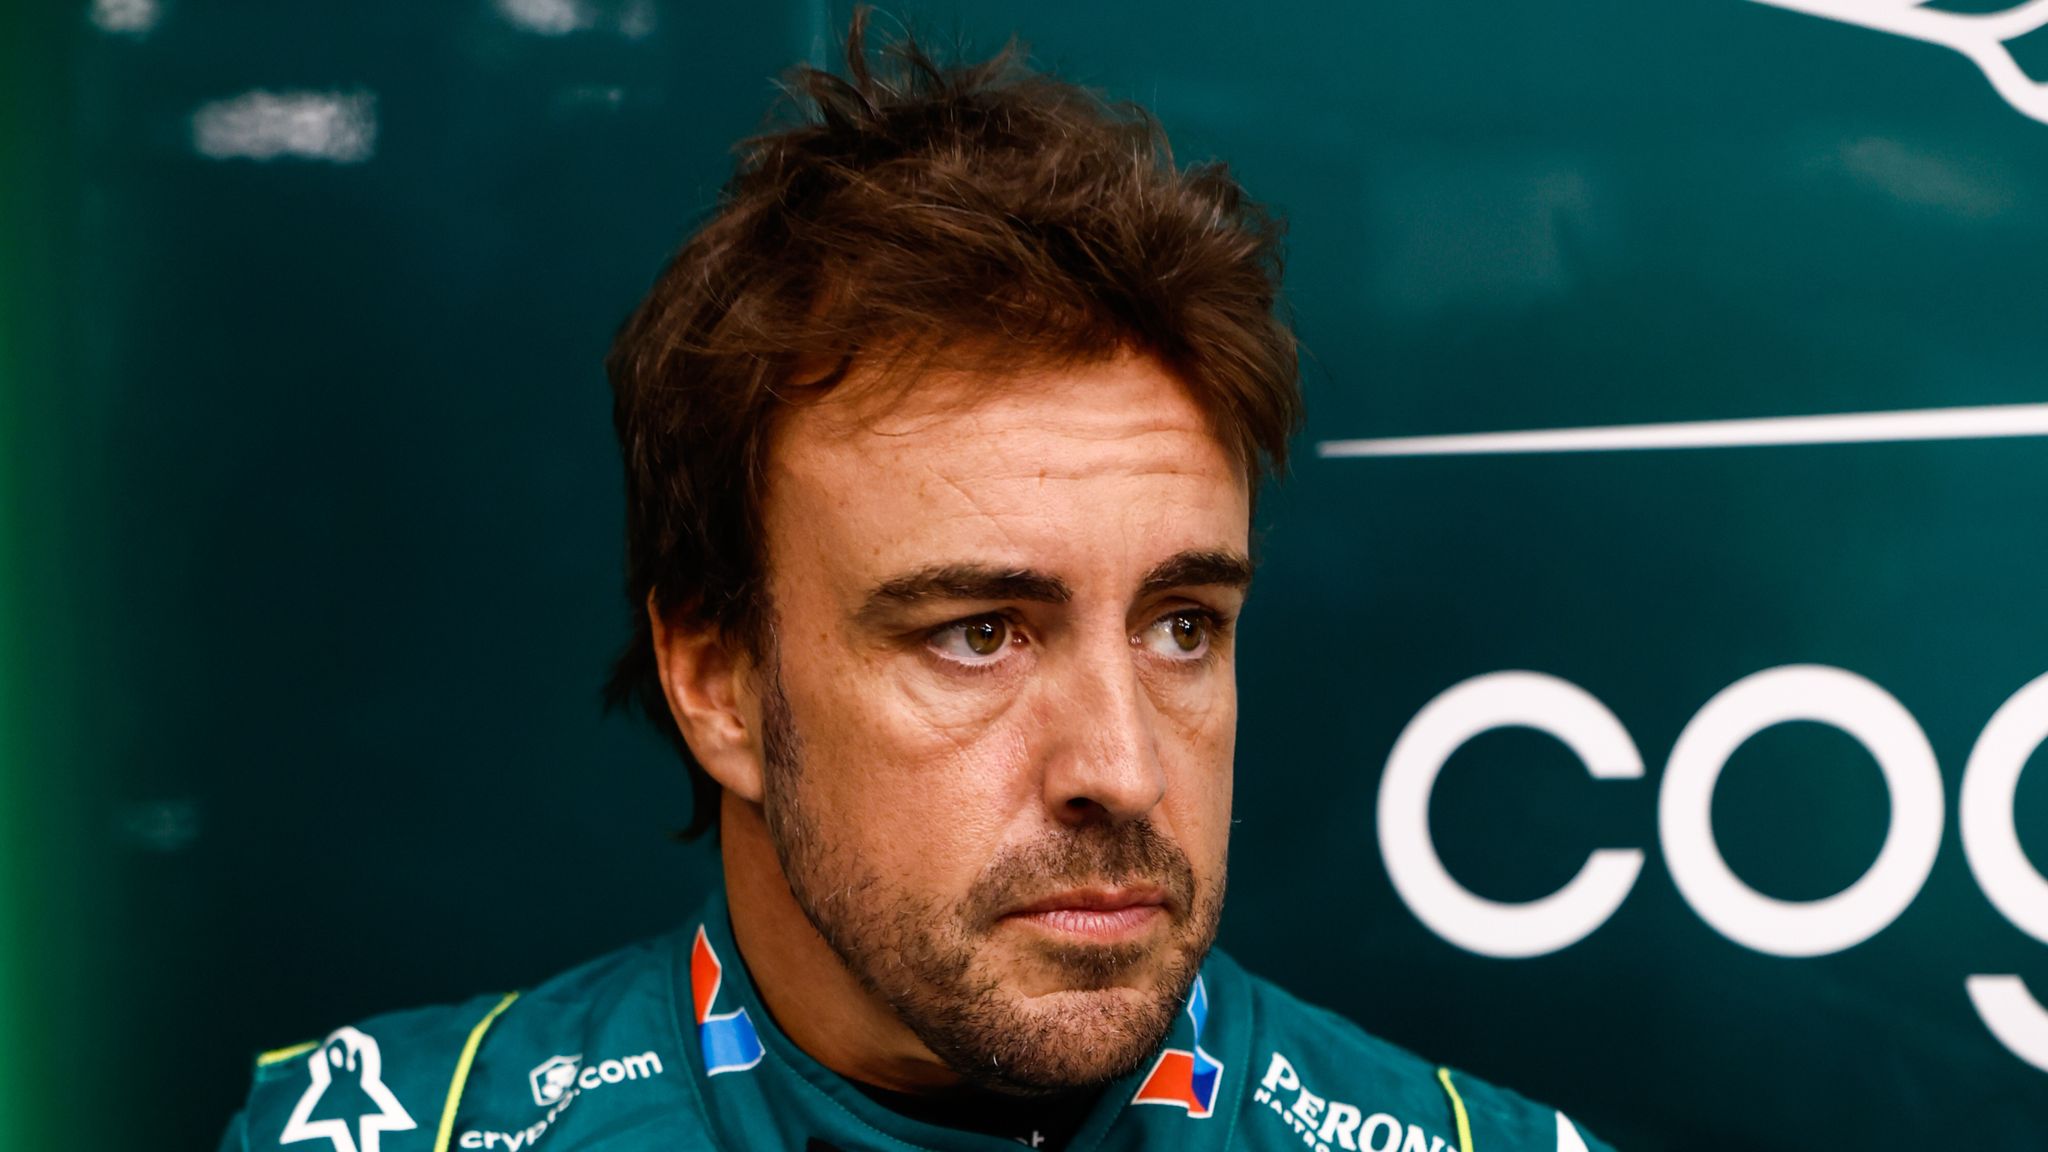 53. Fernando Alonso